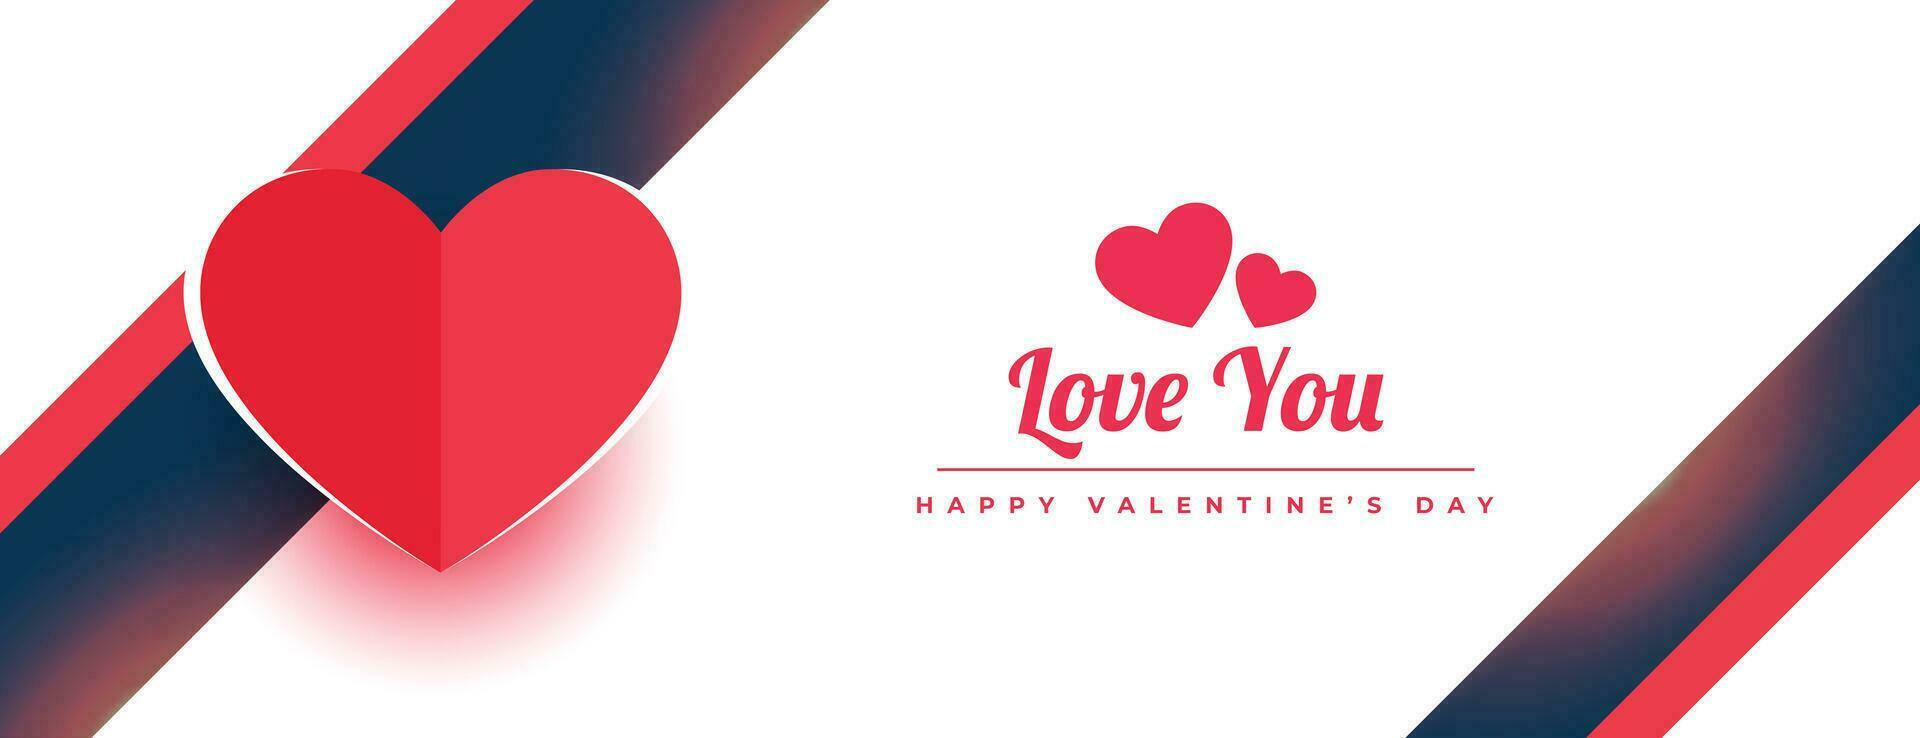 happy valentines day beautiful celebration banner design vector